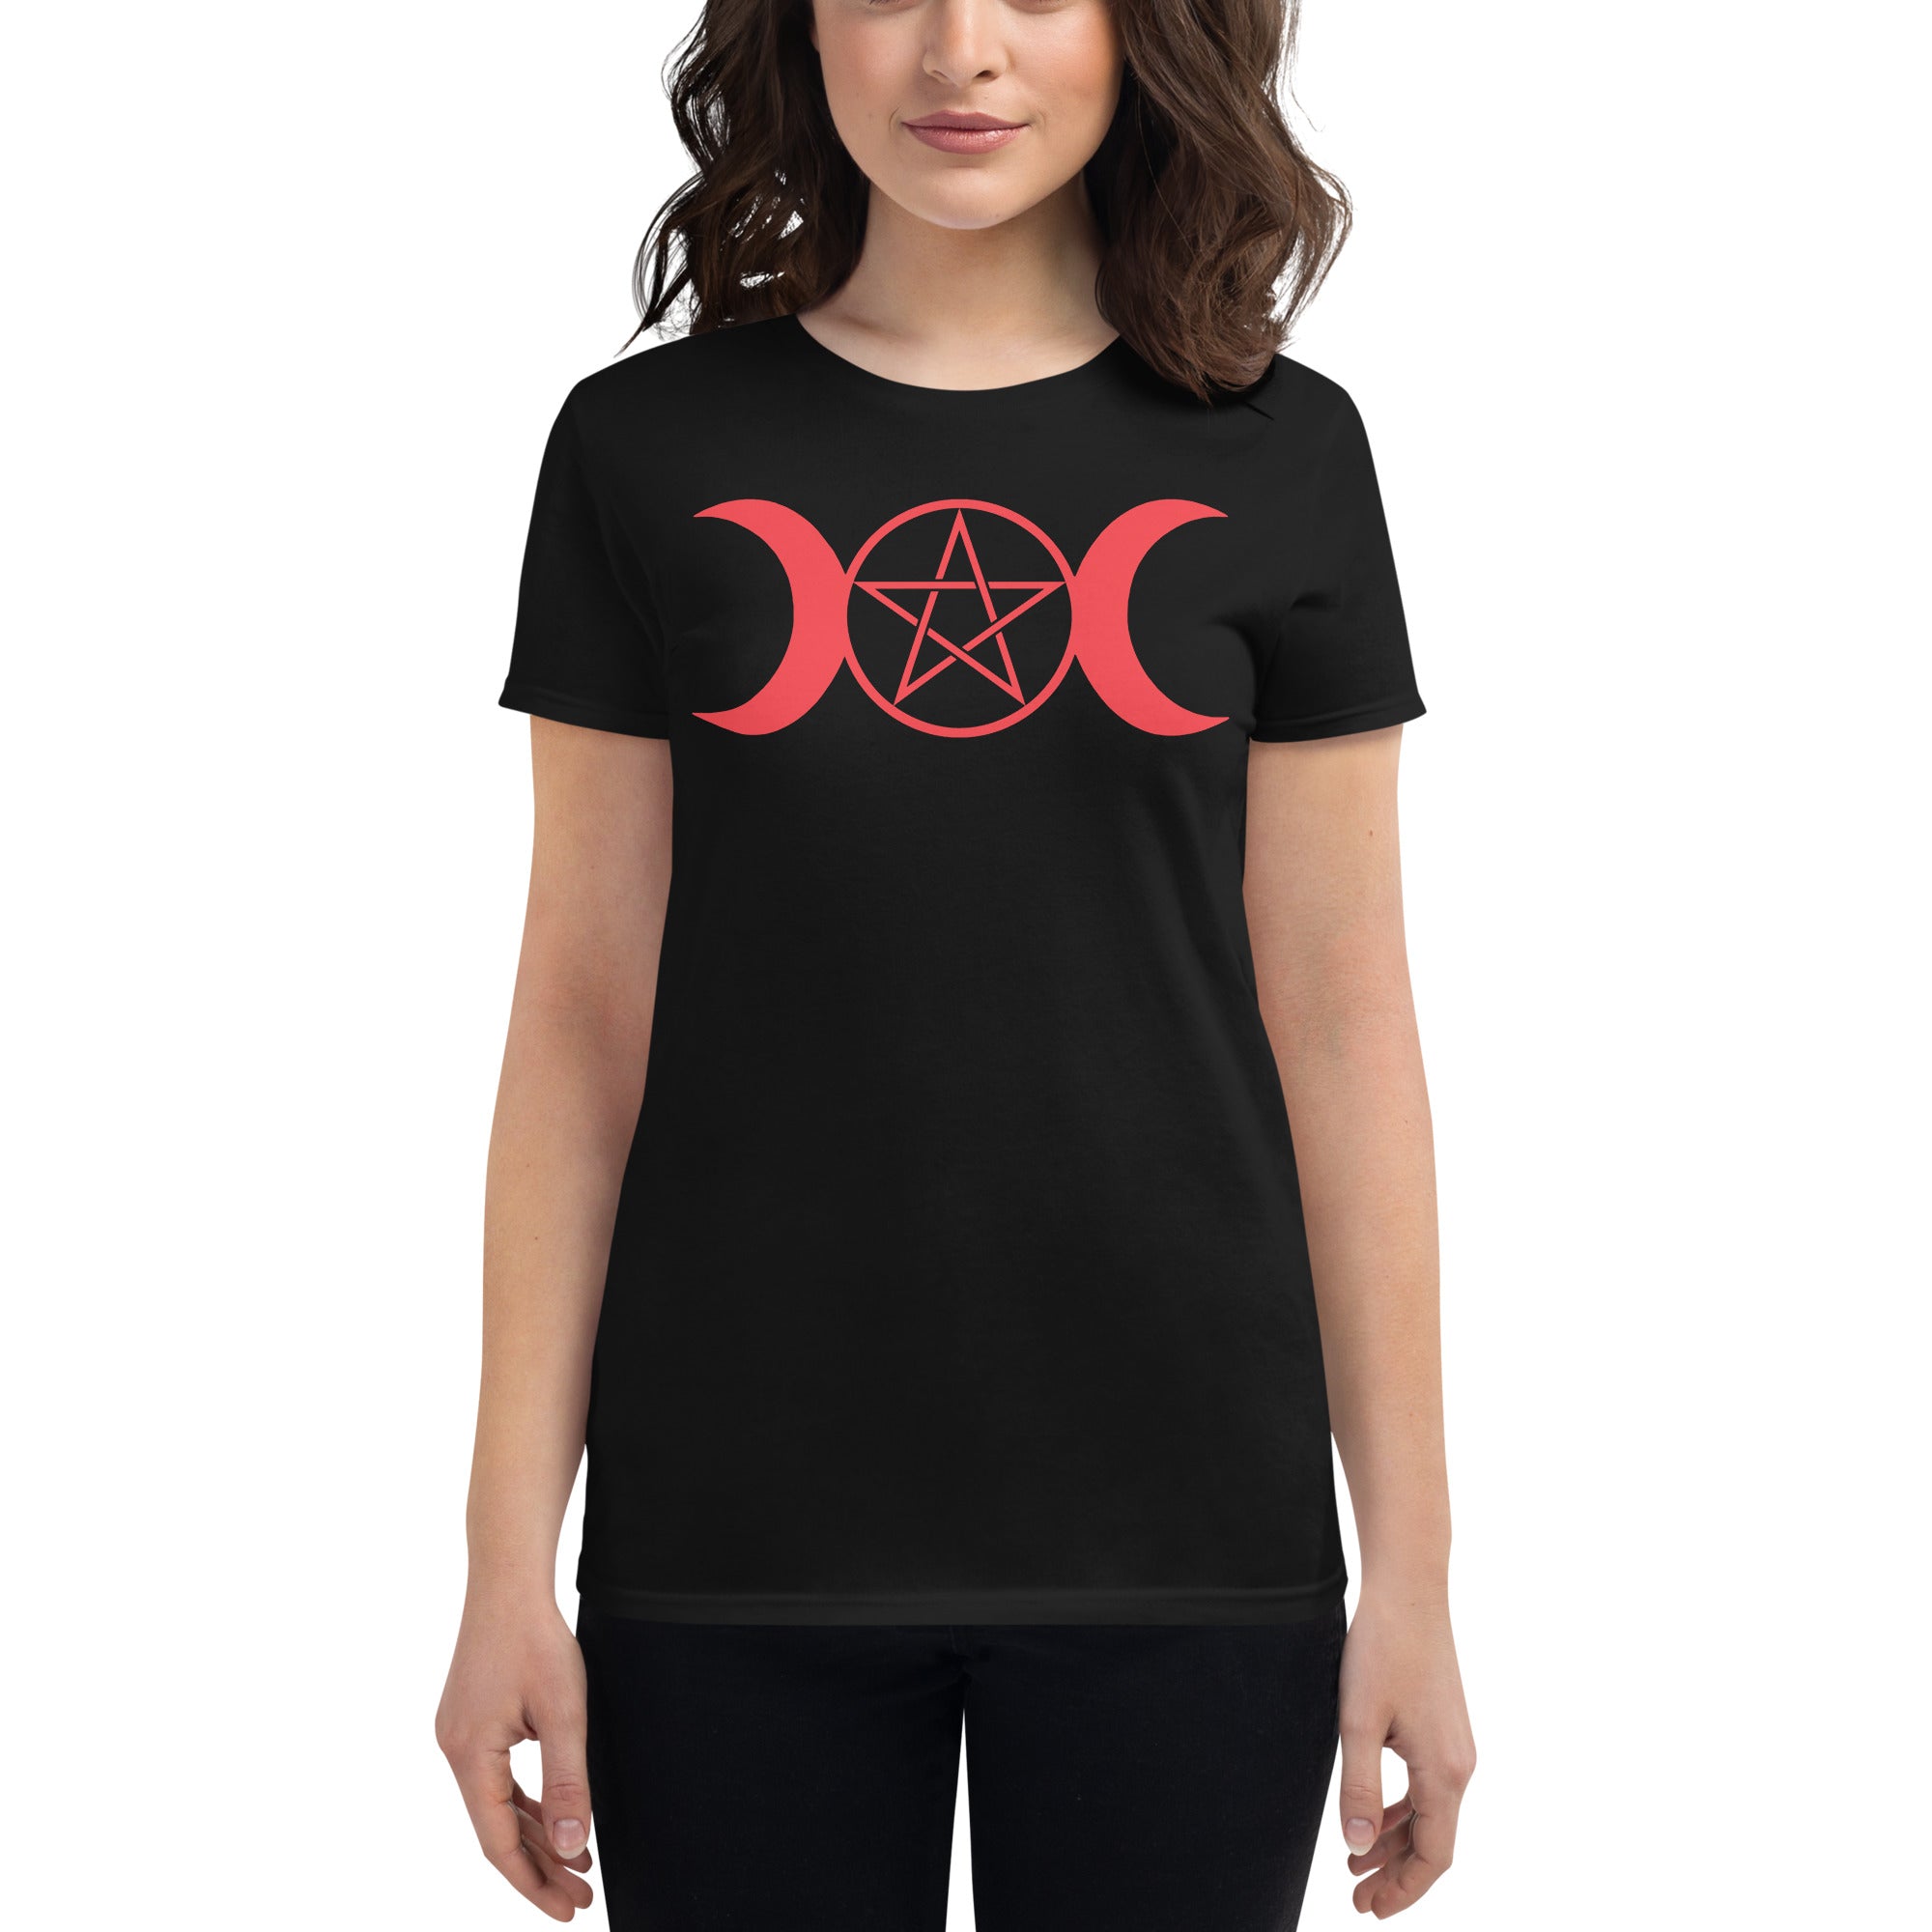 Red Triple Moon Goddess Wiccan Pagan Symbol Women's Short Sleeve Babydoll T-shirt